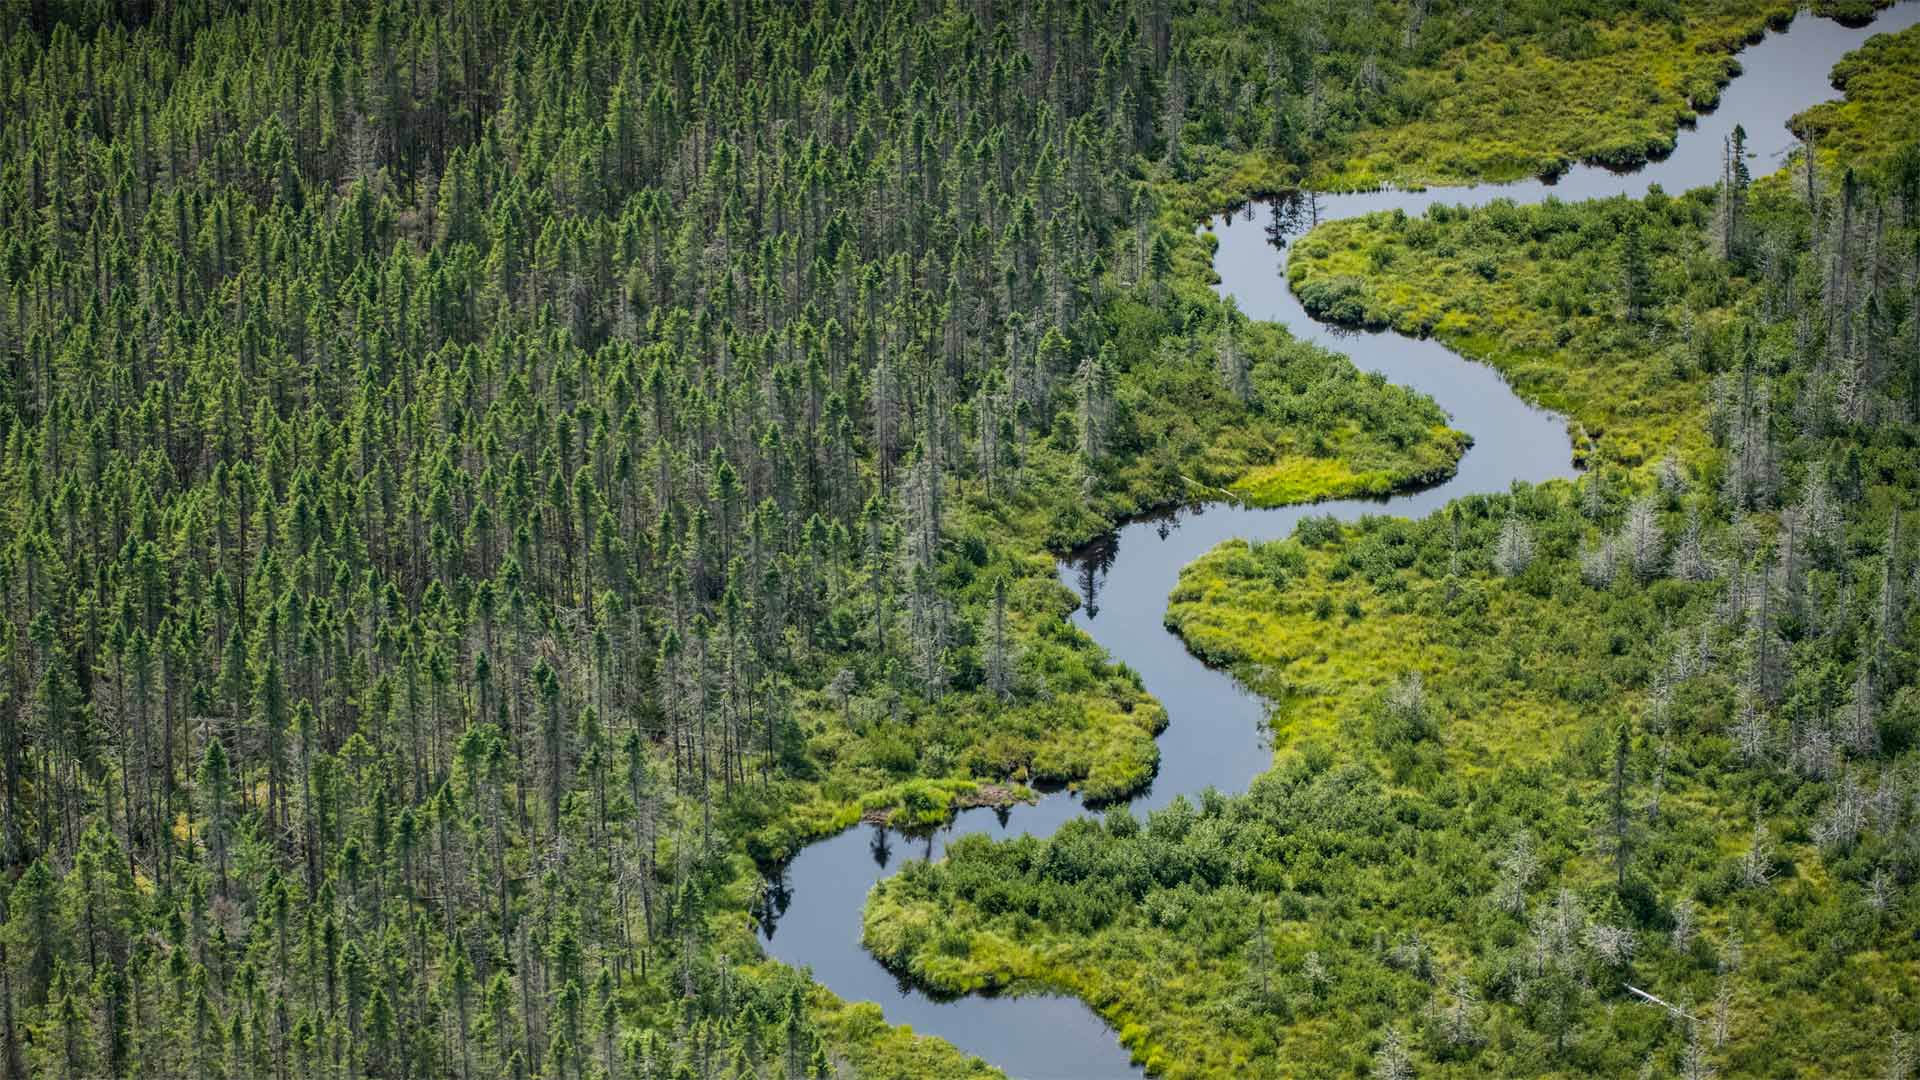 Norcross Brook and wetlands near Moosehead Lake in Piscataquis County, Maine - Aaron Black-Schmidt/Tandem Stills + Motion)